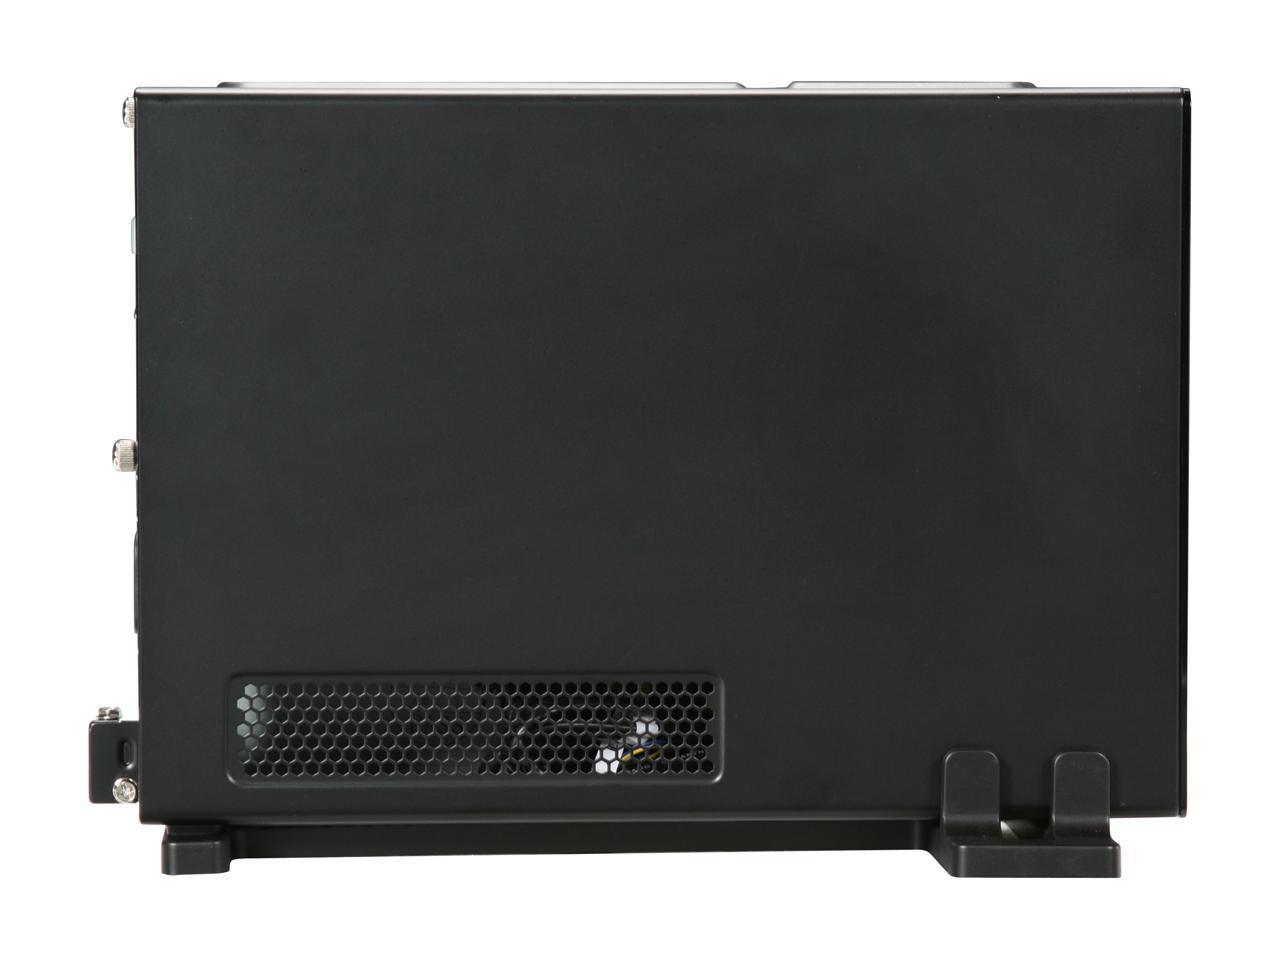 Antec ISK Series ISK 300-150 Black 0.8mm cold rolled steel Mini-ITX Desktop Computer Case 150W Power Supply